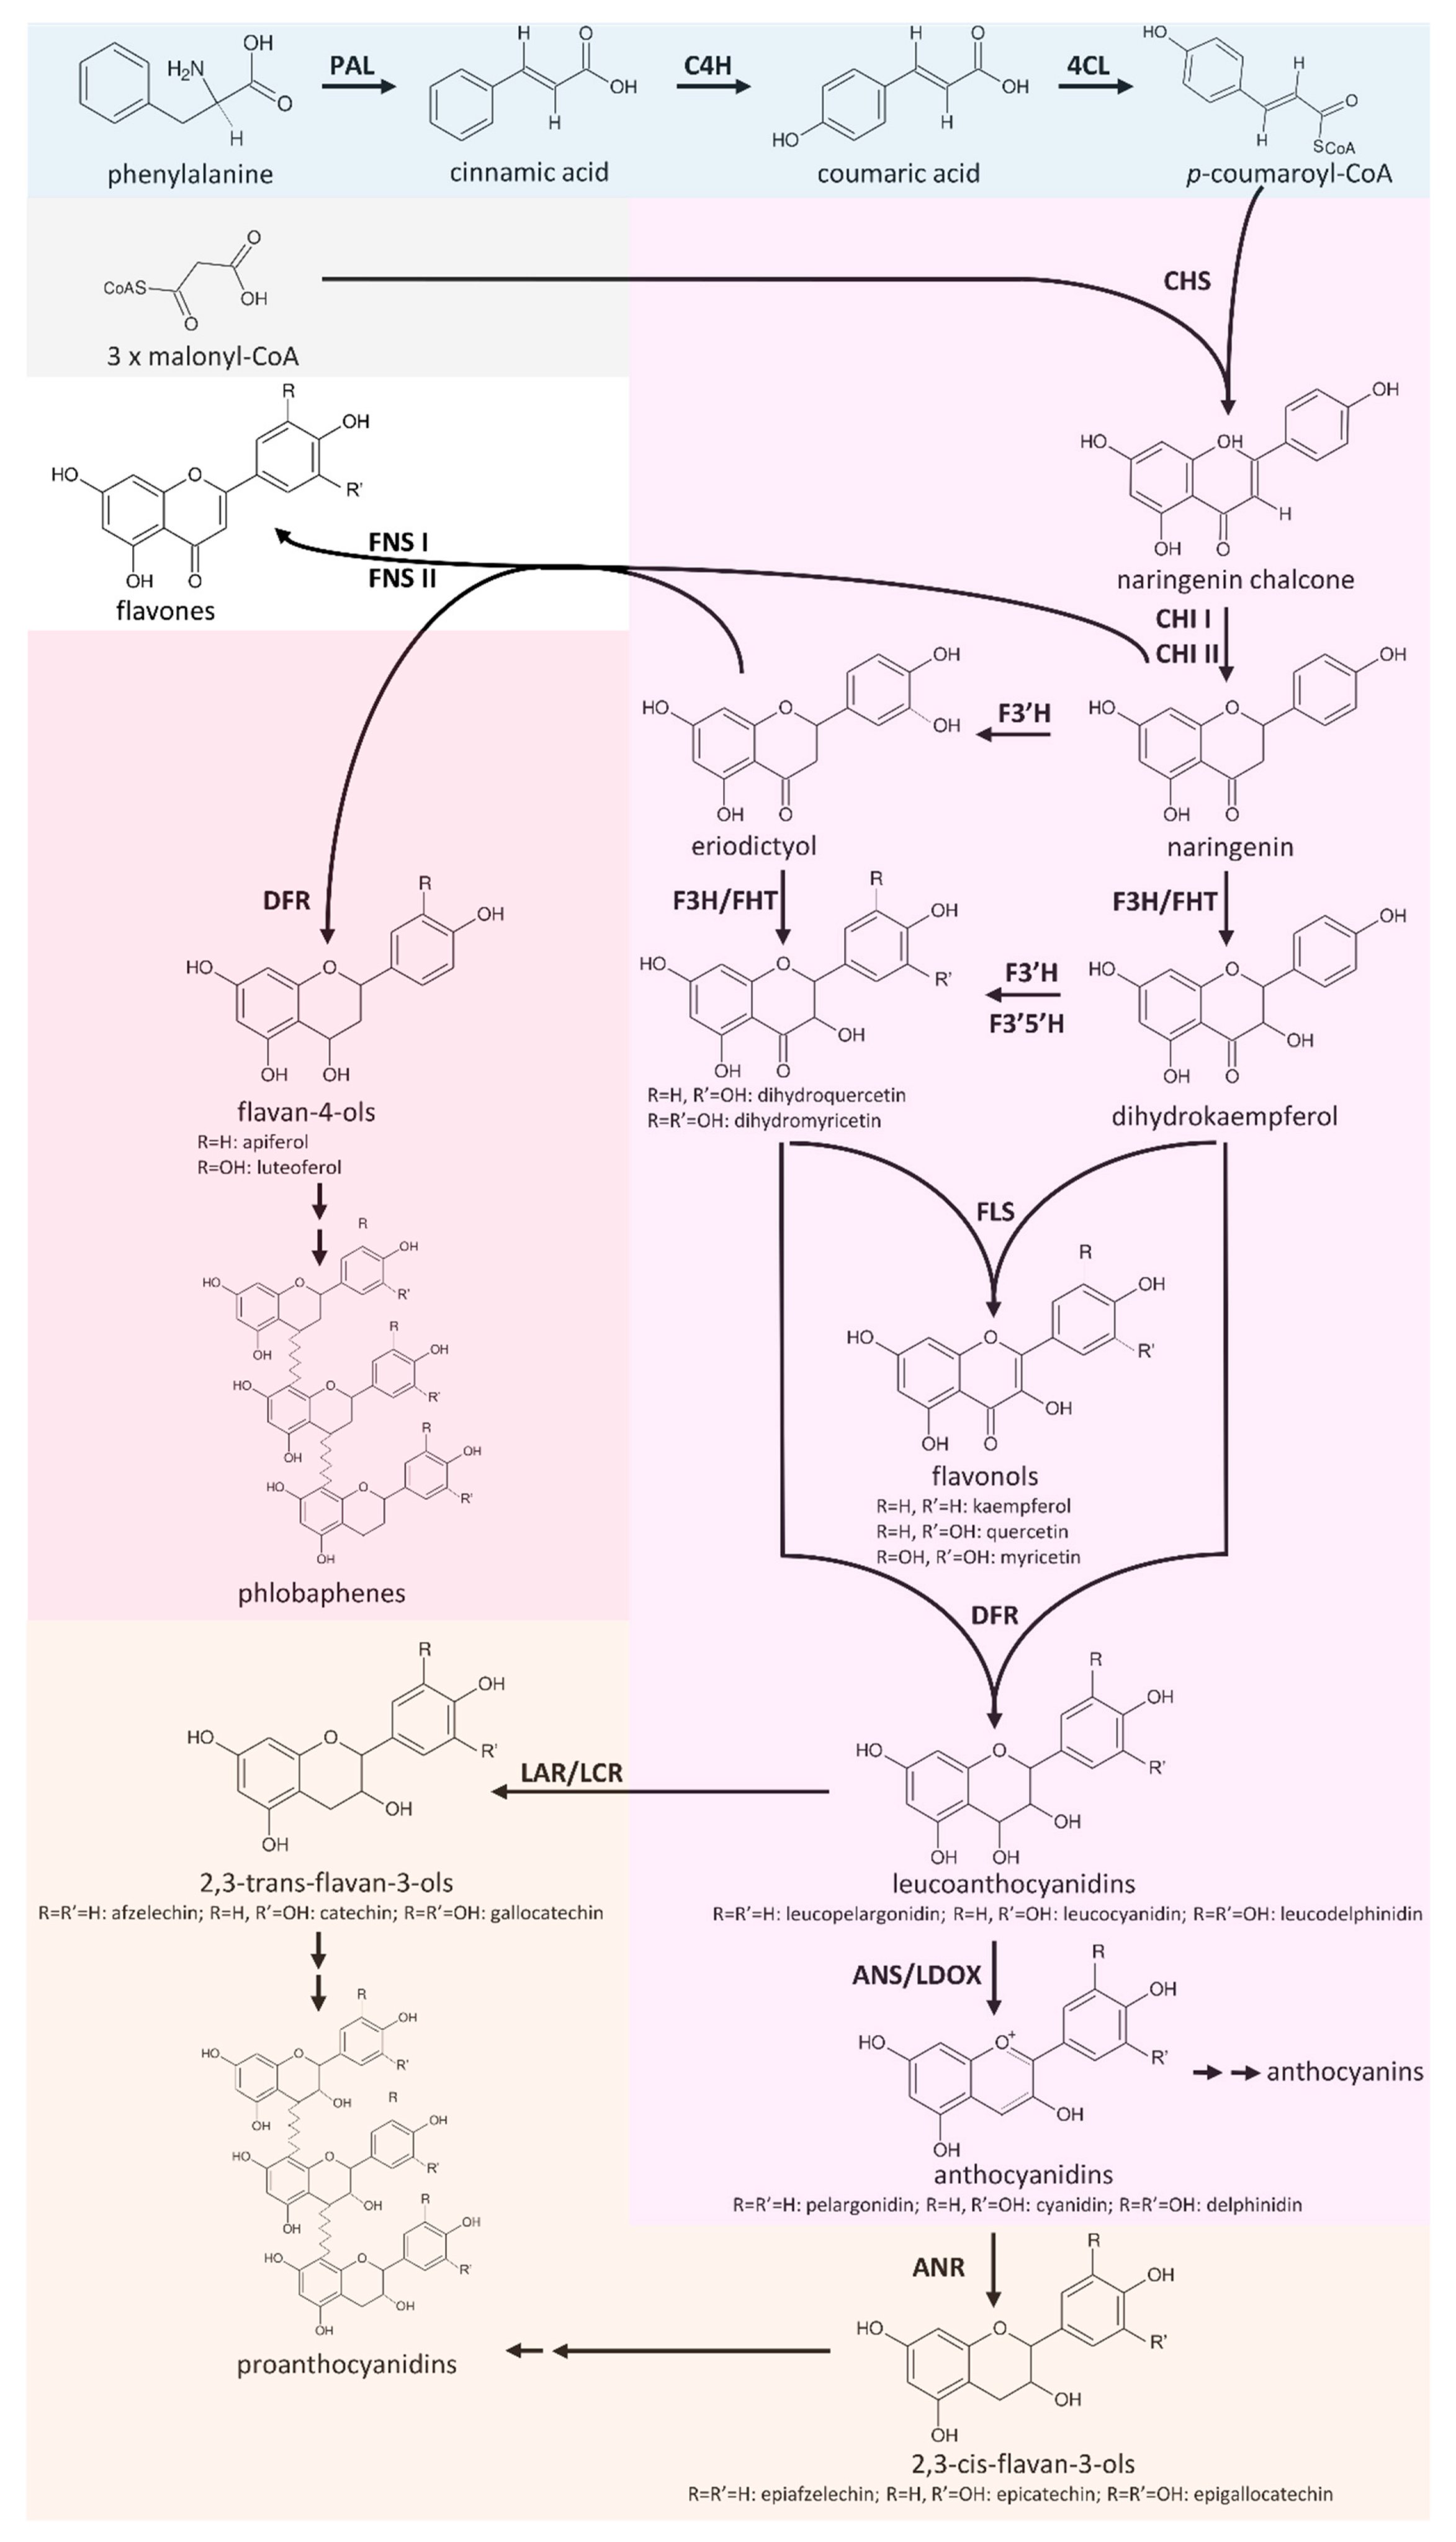 Flavonoid biosynthesis pathway overview (Tweet #1)